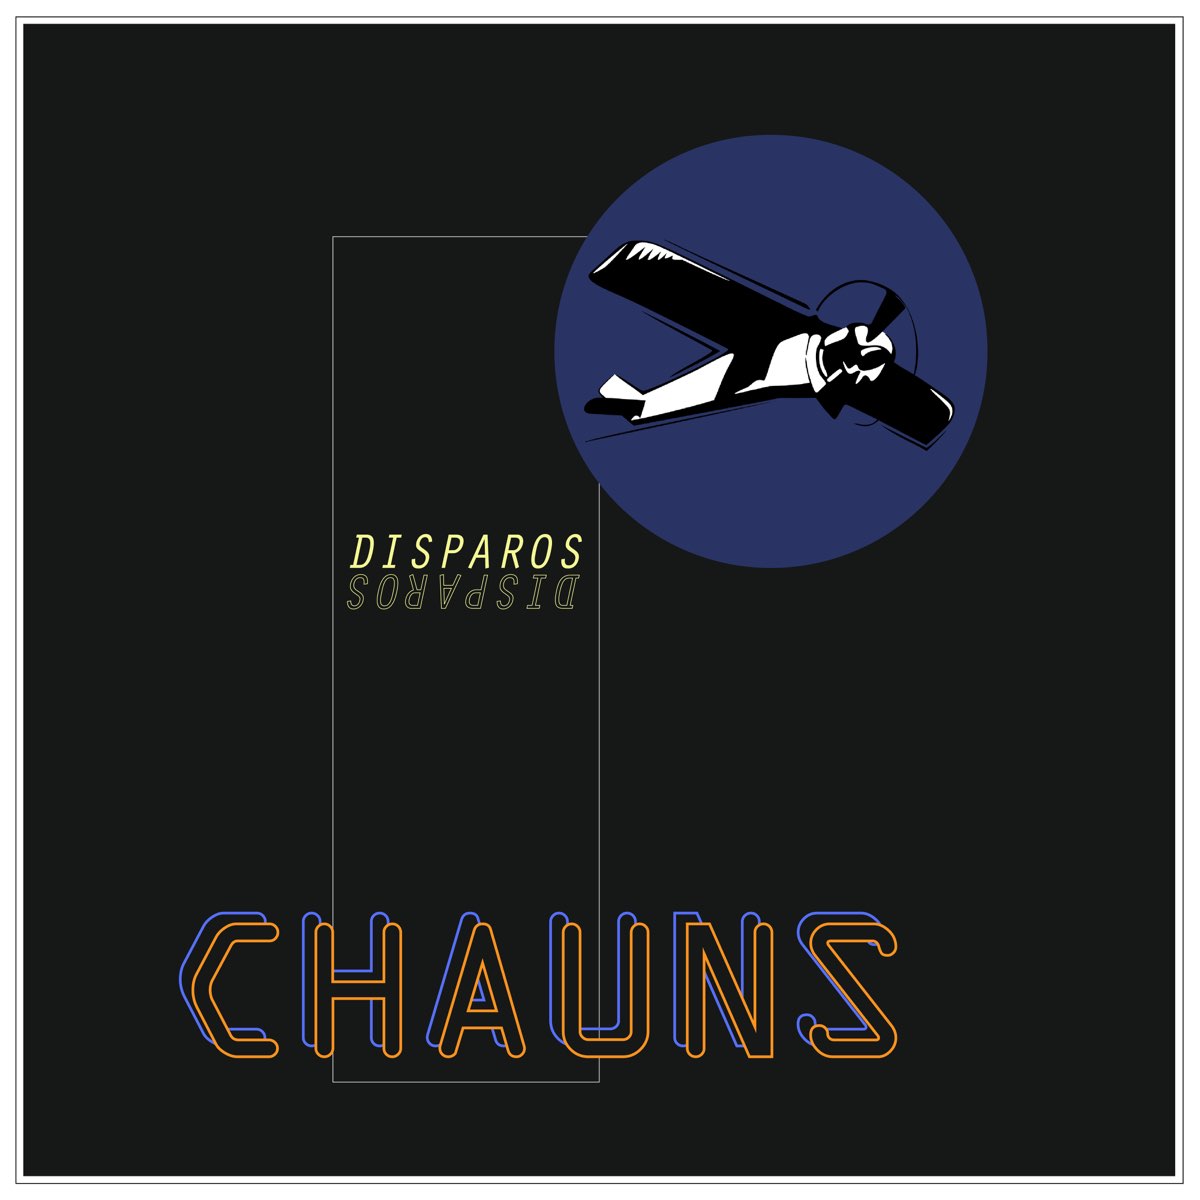 ‎Disparos - EP - Album by Chauns - Apple Music